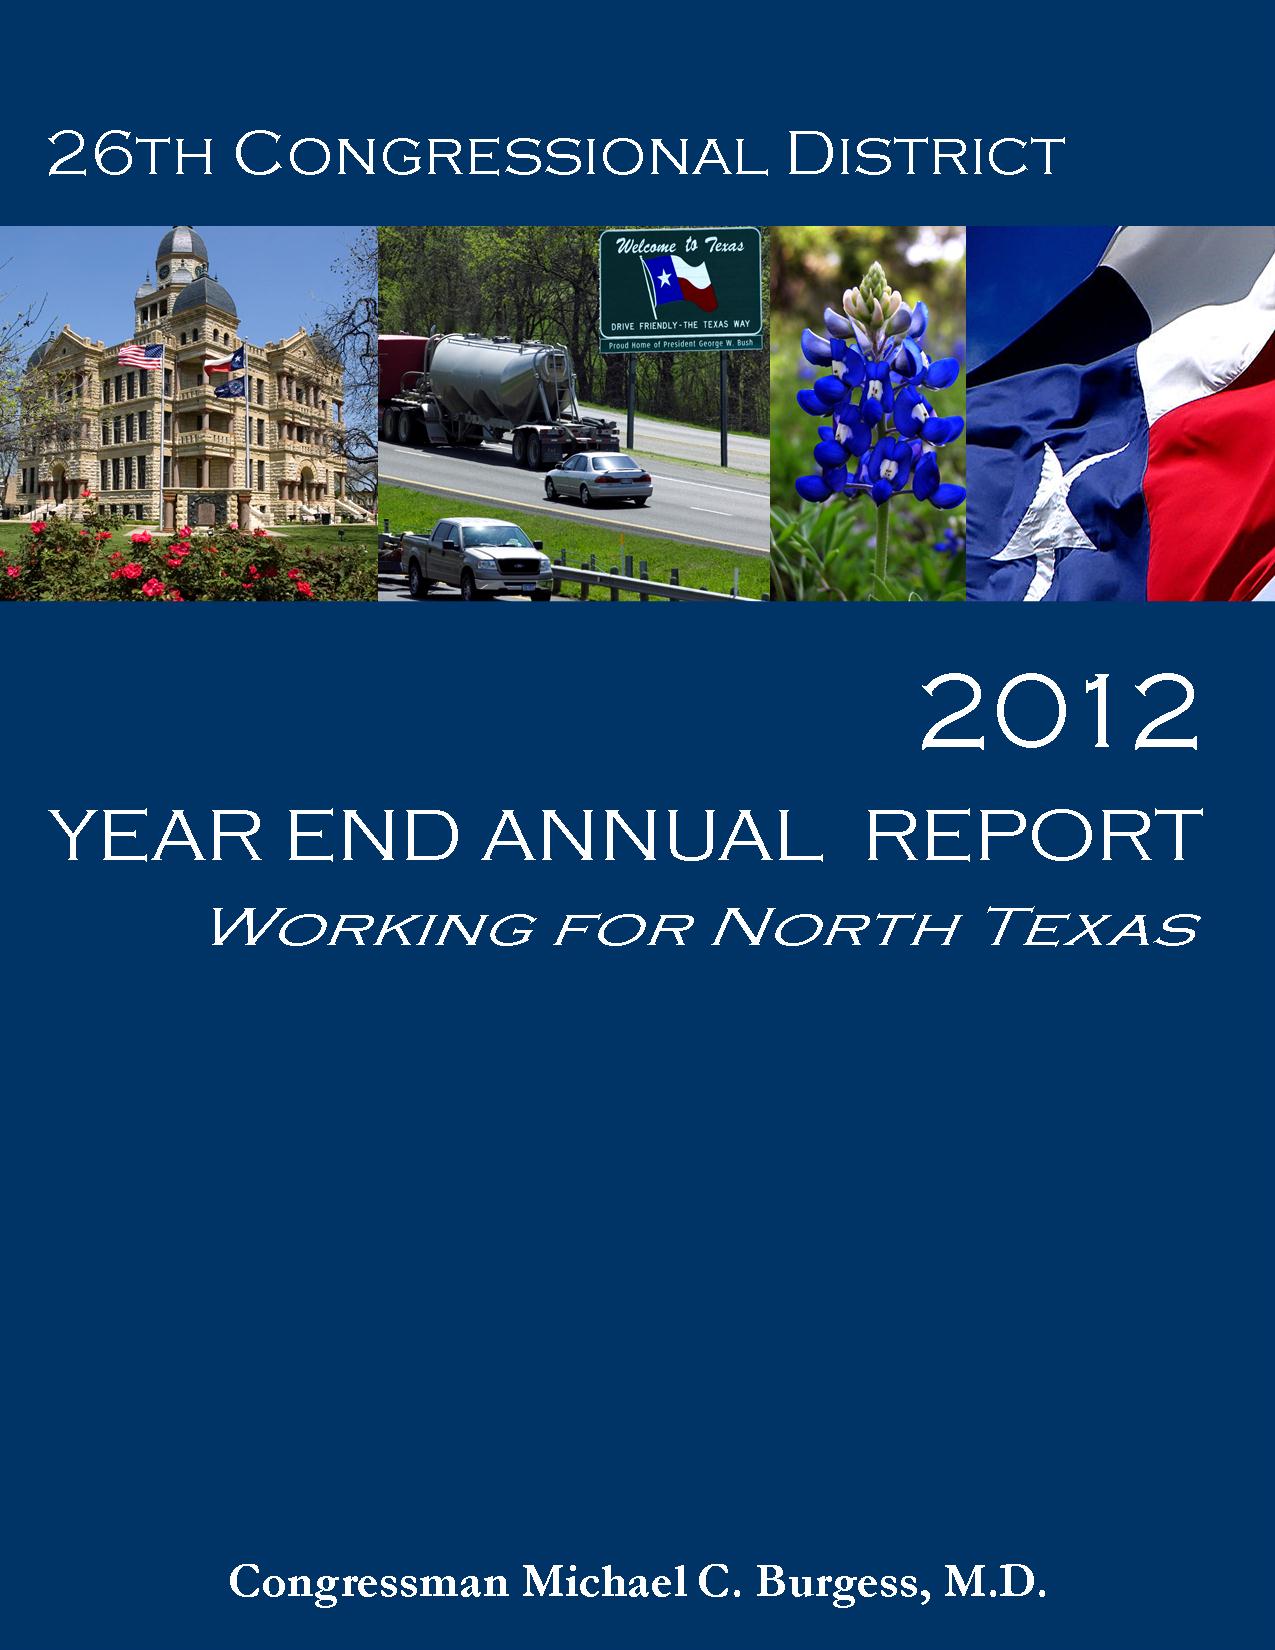 /uploadedfiles/2012_year_end_annual_report_image.jpg